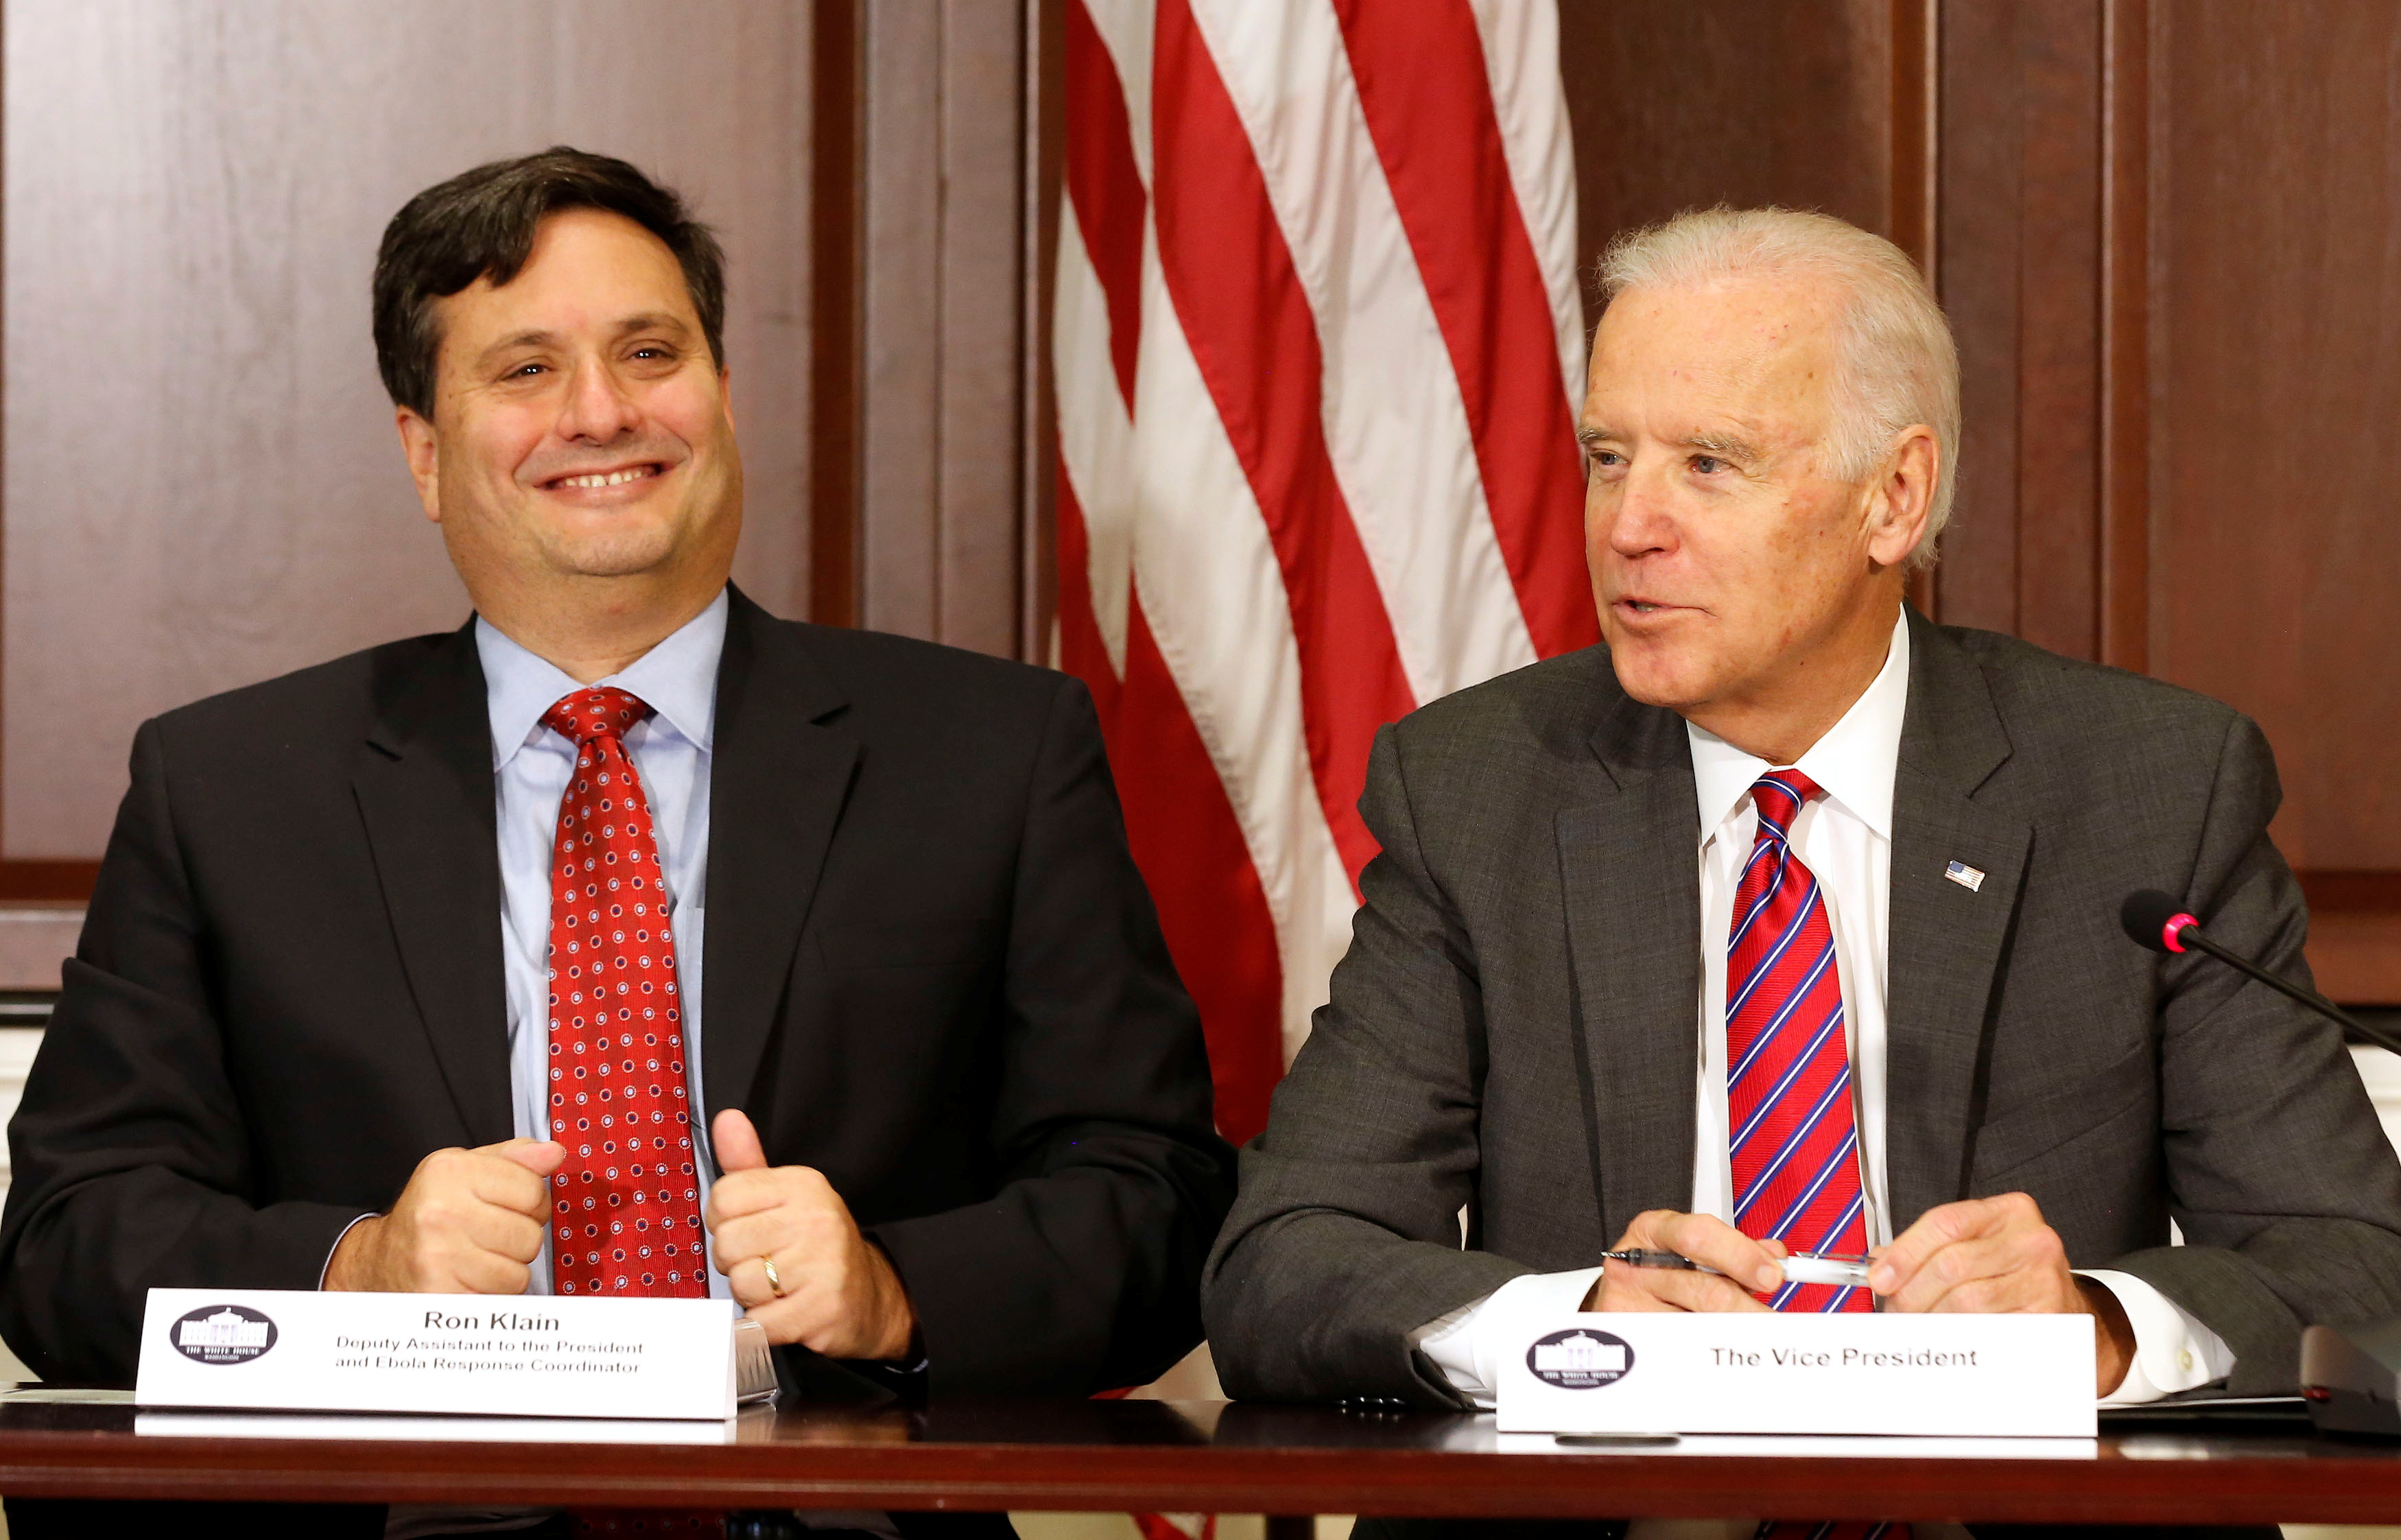  Joe Biden junto a Ron Klain en la Casa Blanca en Washington en el 2014.        REUTERS/Larry Downing/File Picture